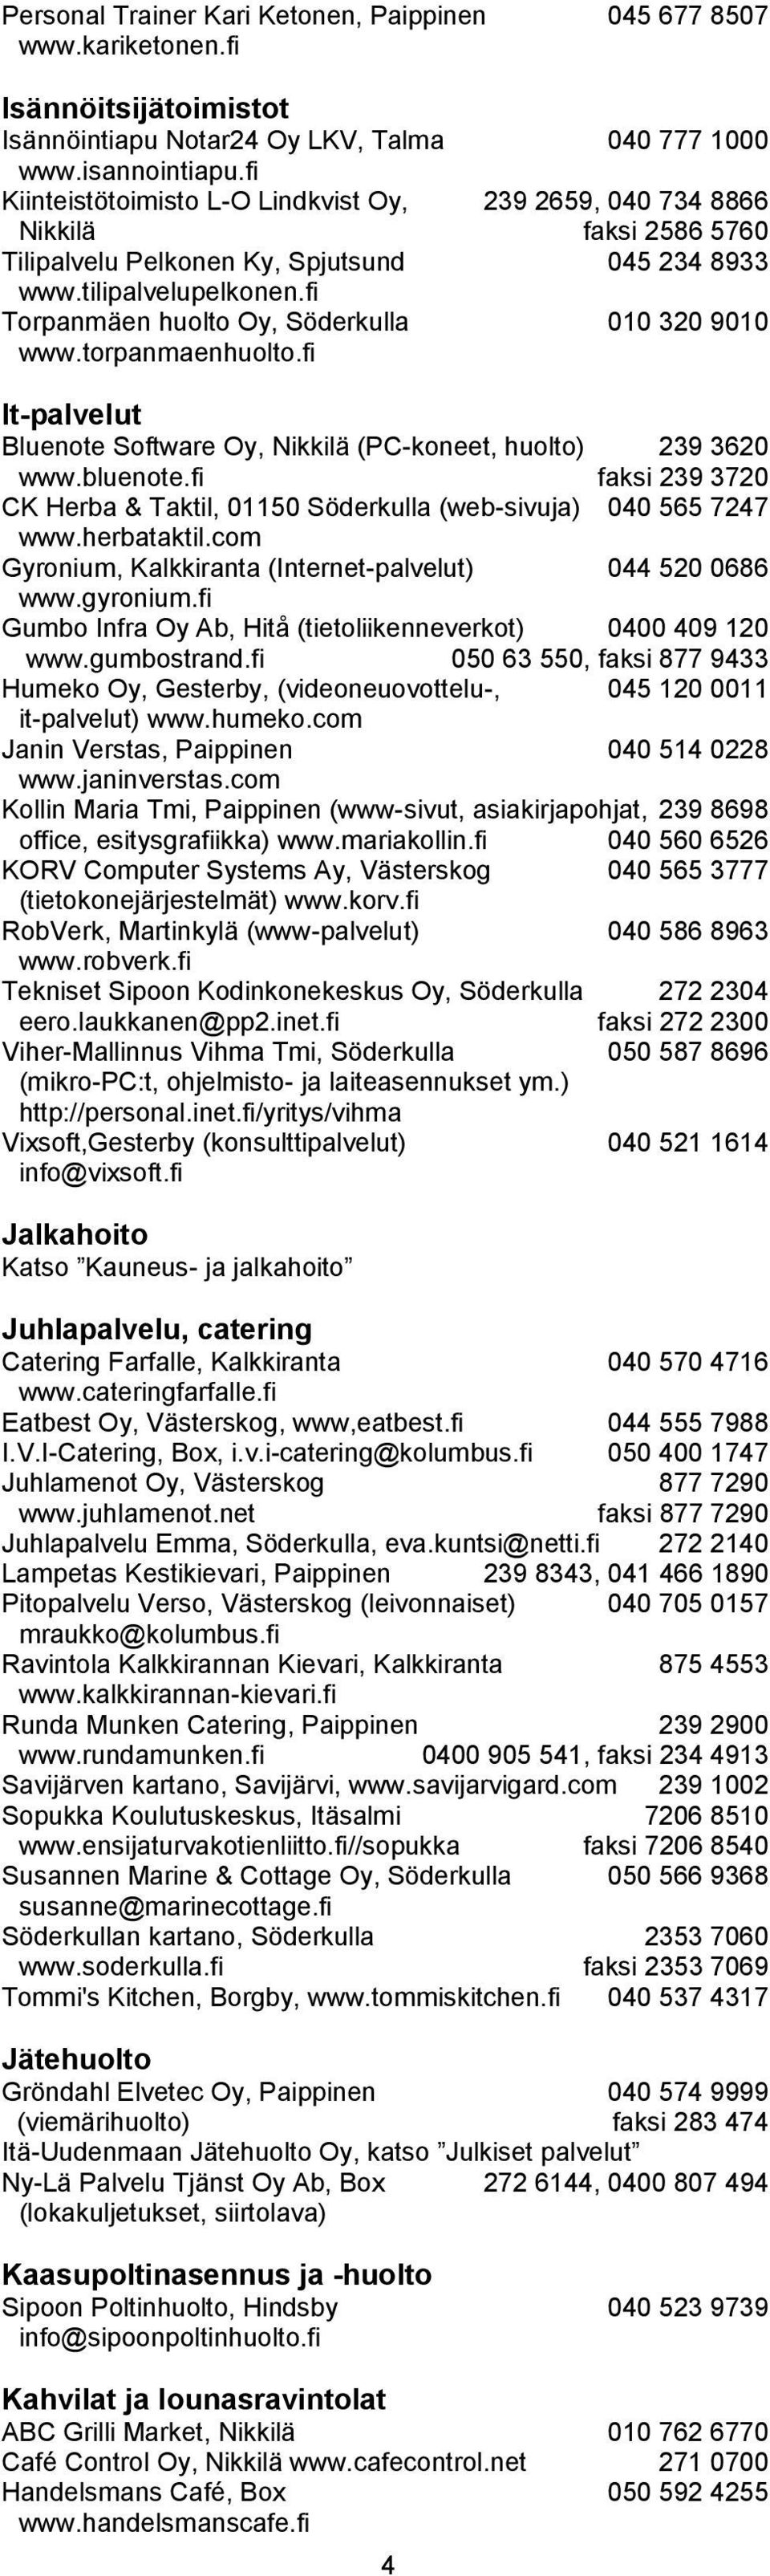 fi Torpanmäen huolto Oy, Söderkulla 010 320 9010 www.torpanmaenhuolto.fi It-palvelut Bluenote Software Oy, Nikkilä (PC-koneet, huolto) 239 3620 www.bluenote.